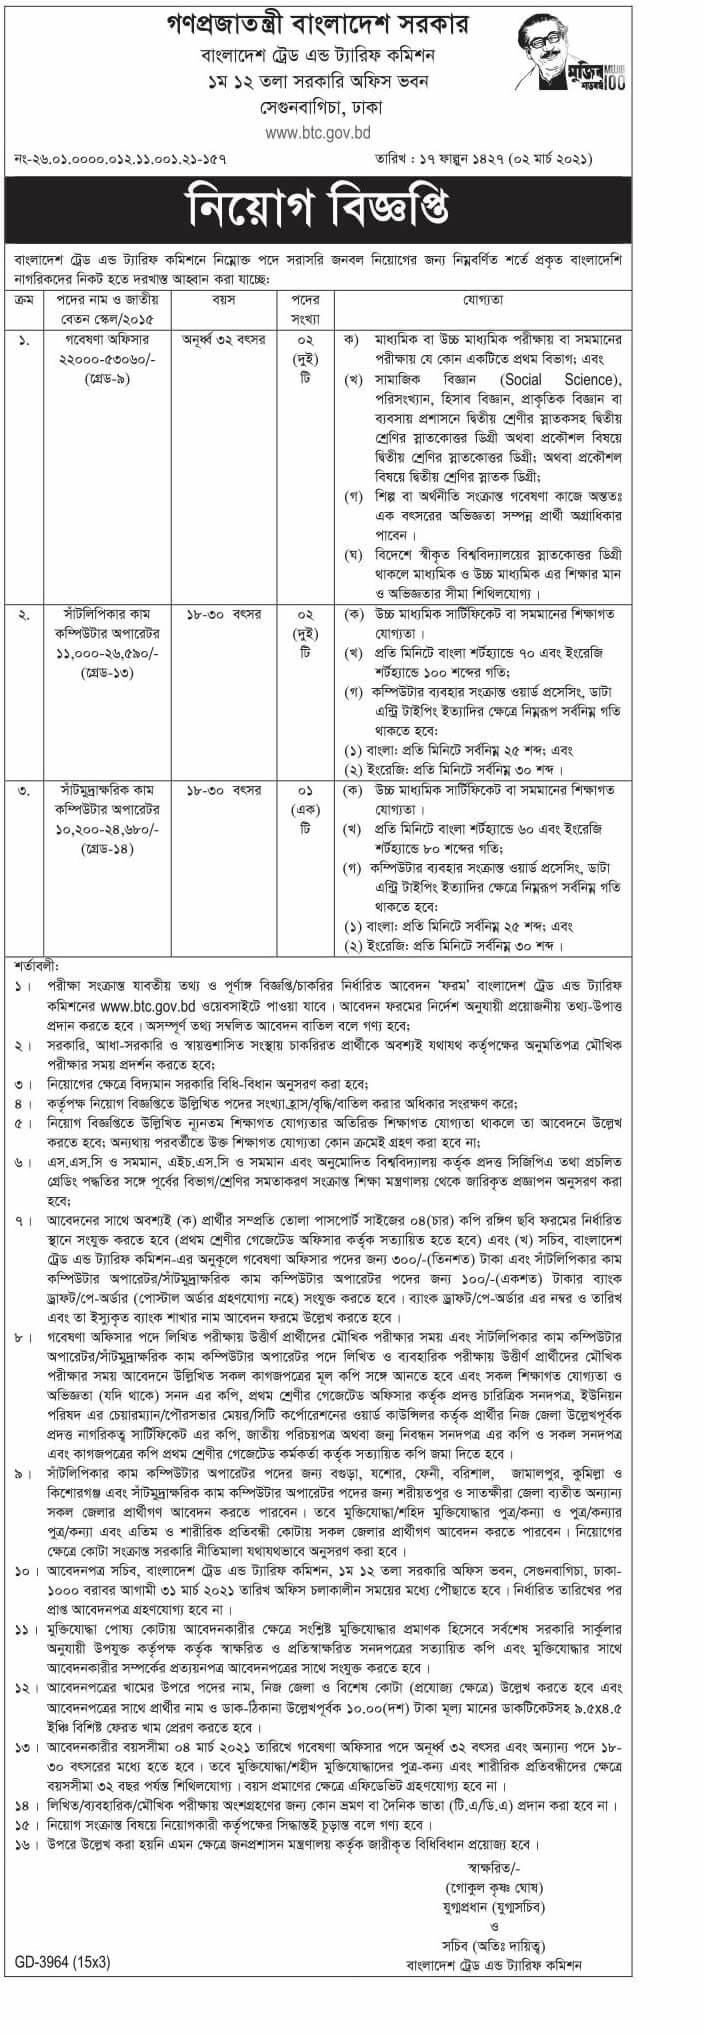 Bangladesh Tariff Commission BTC Job Circular 2021